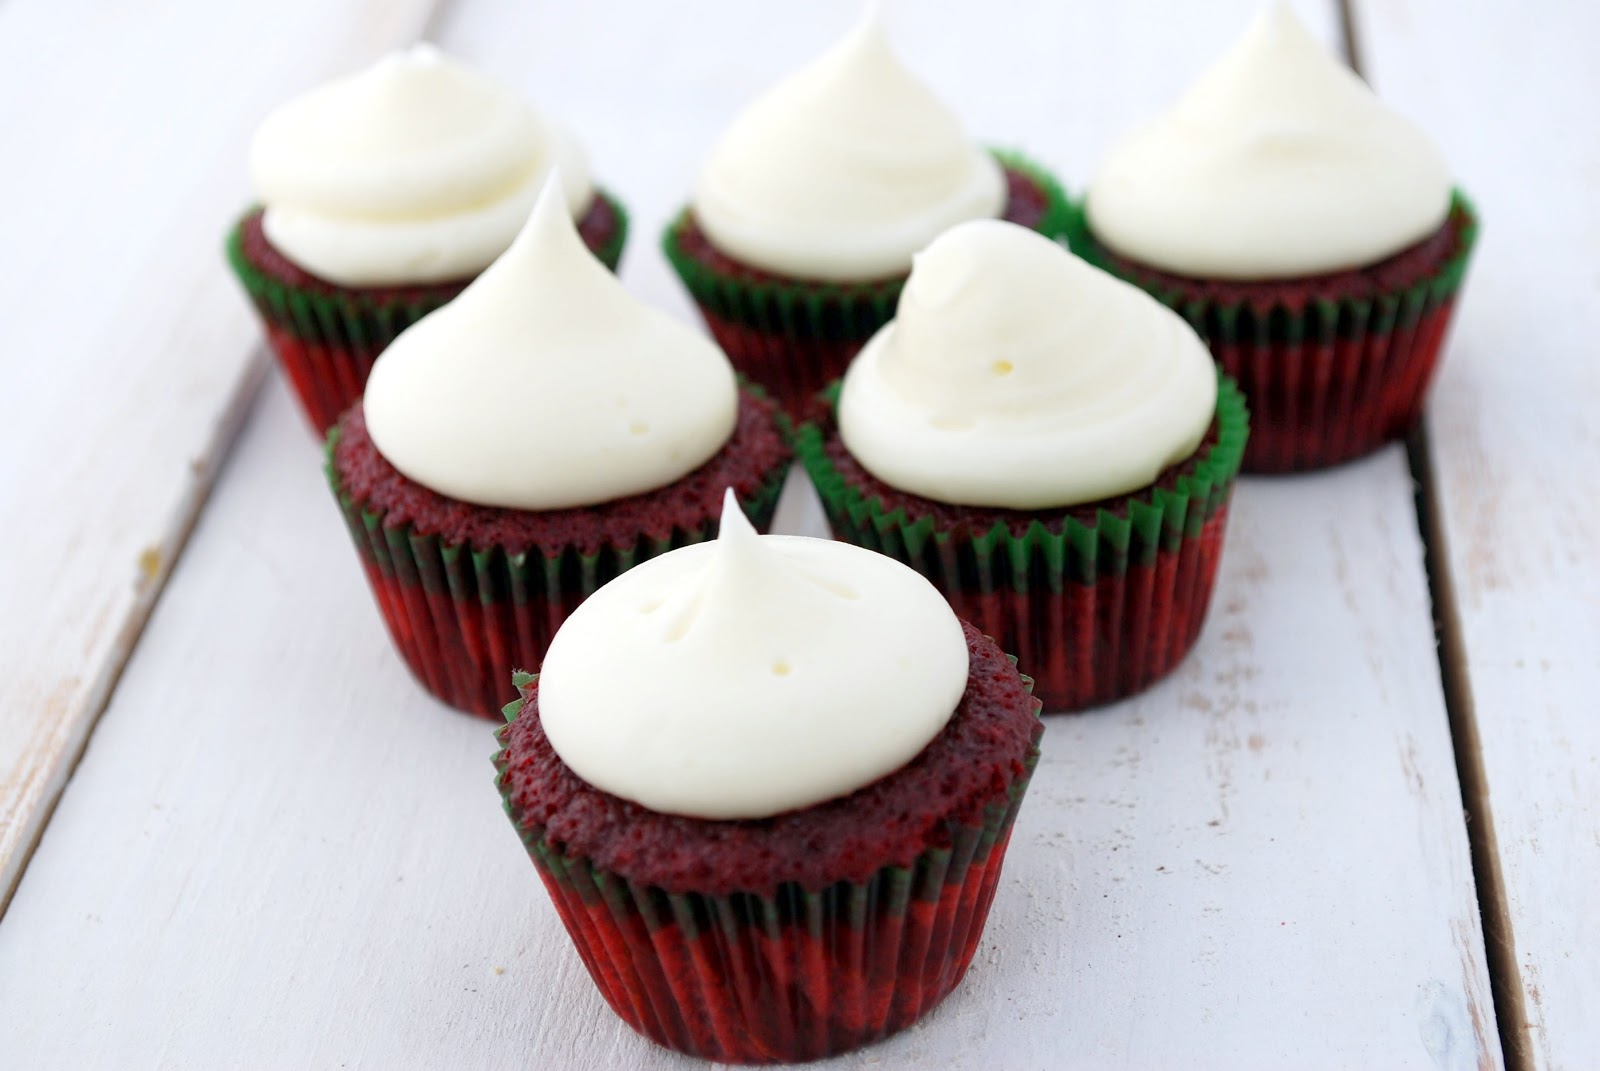 Mini Red Velvet Cupcakes (makes 48 mini cupcakes) Ingredients. 